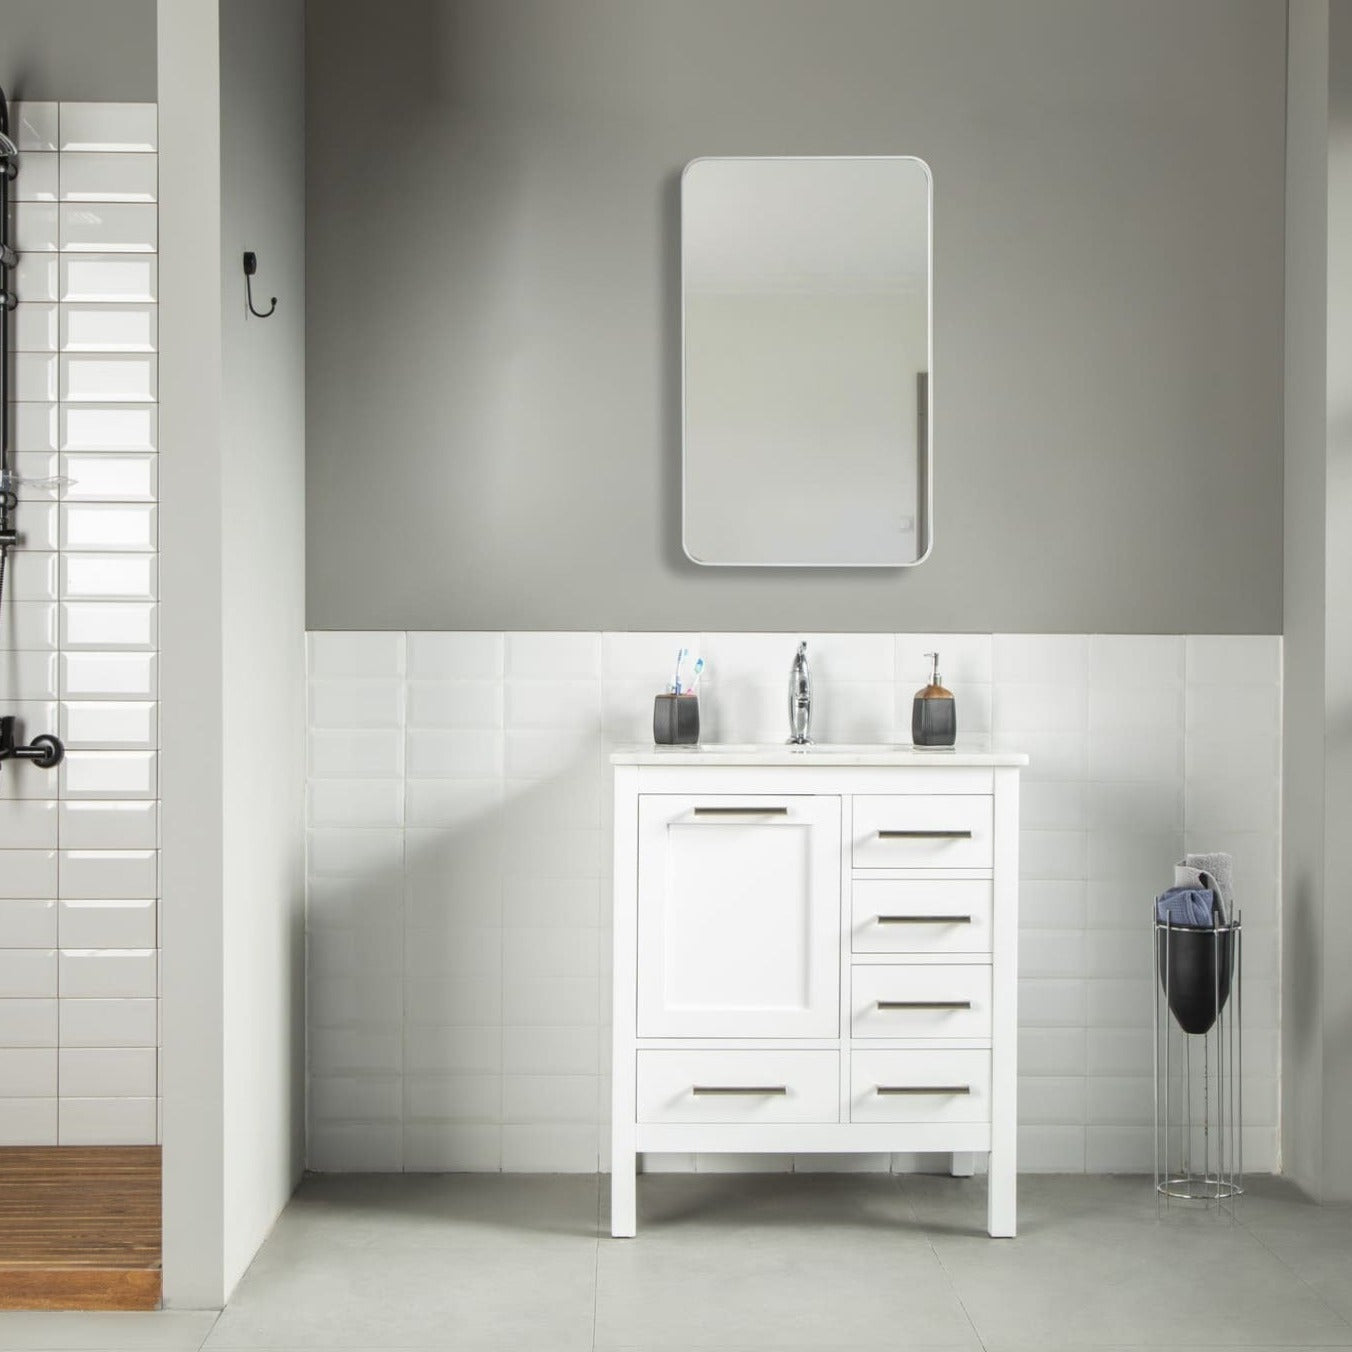 Ahley Bathroom Vanity Homelero 30"  #size_30"  #color_white  #hardware_brushed nickel